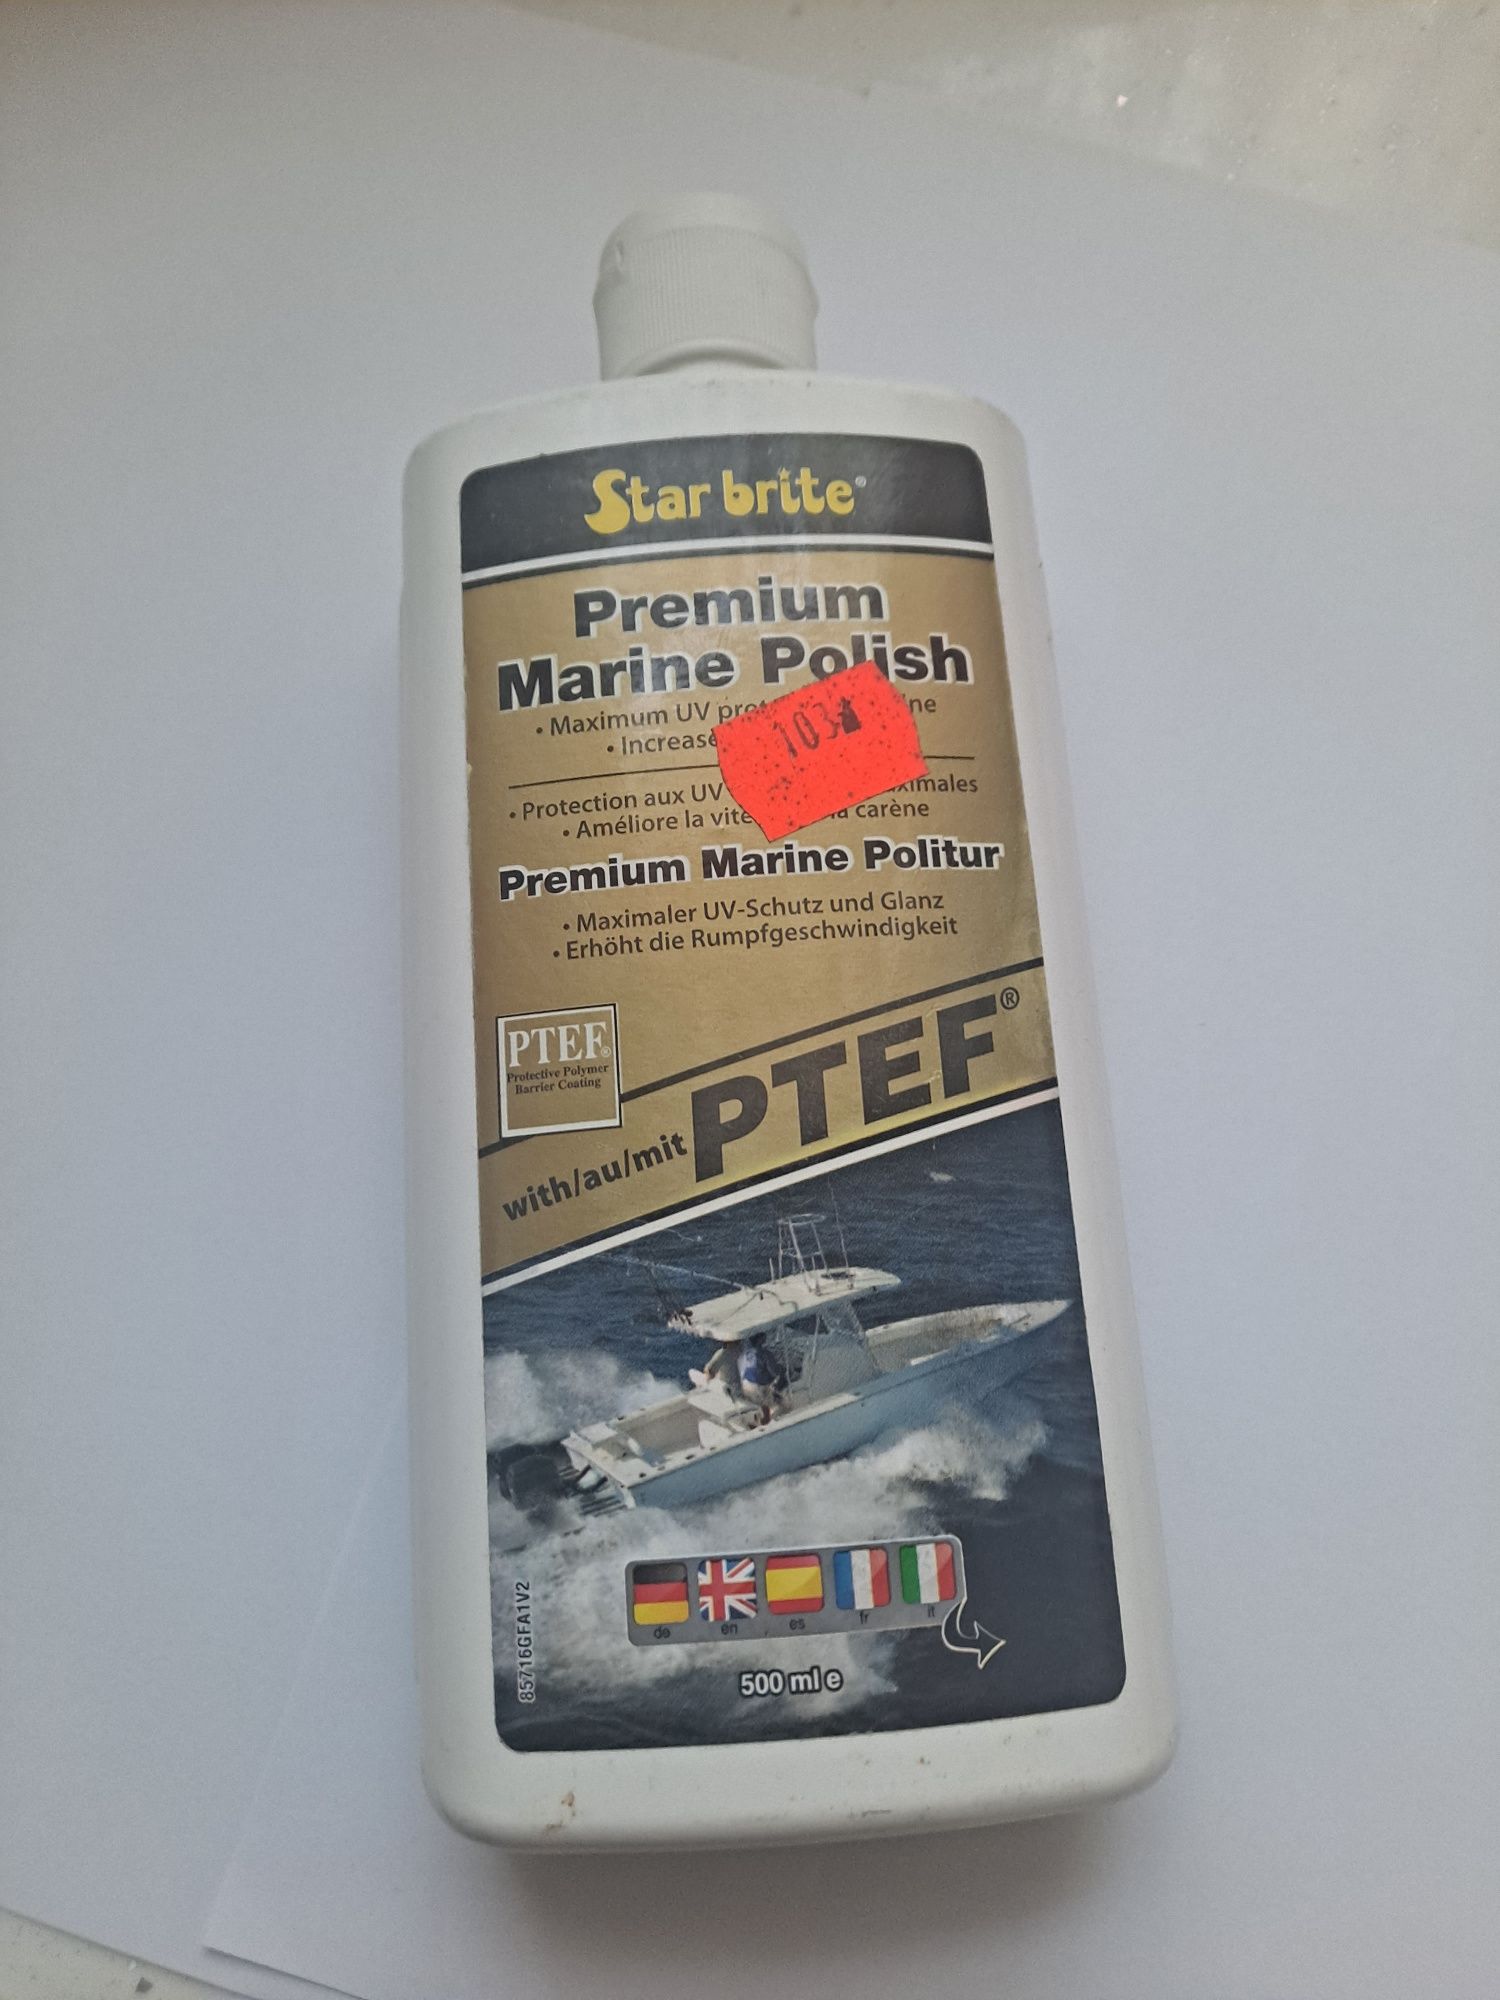 Starbrite Premium Marine Polish Z PTEF